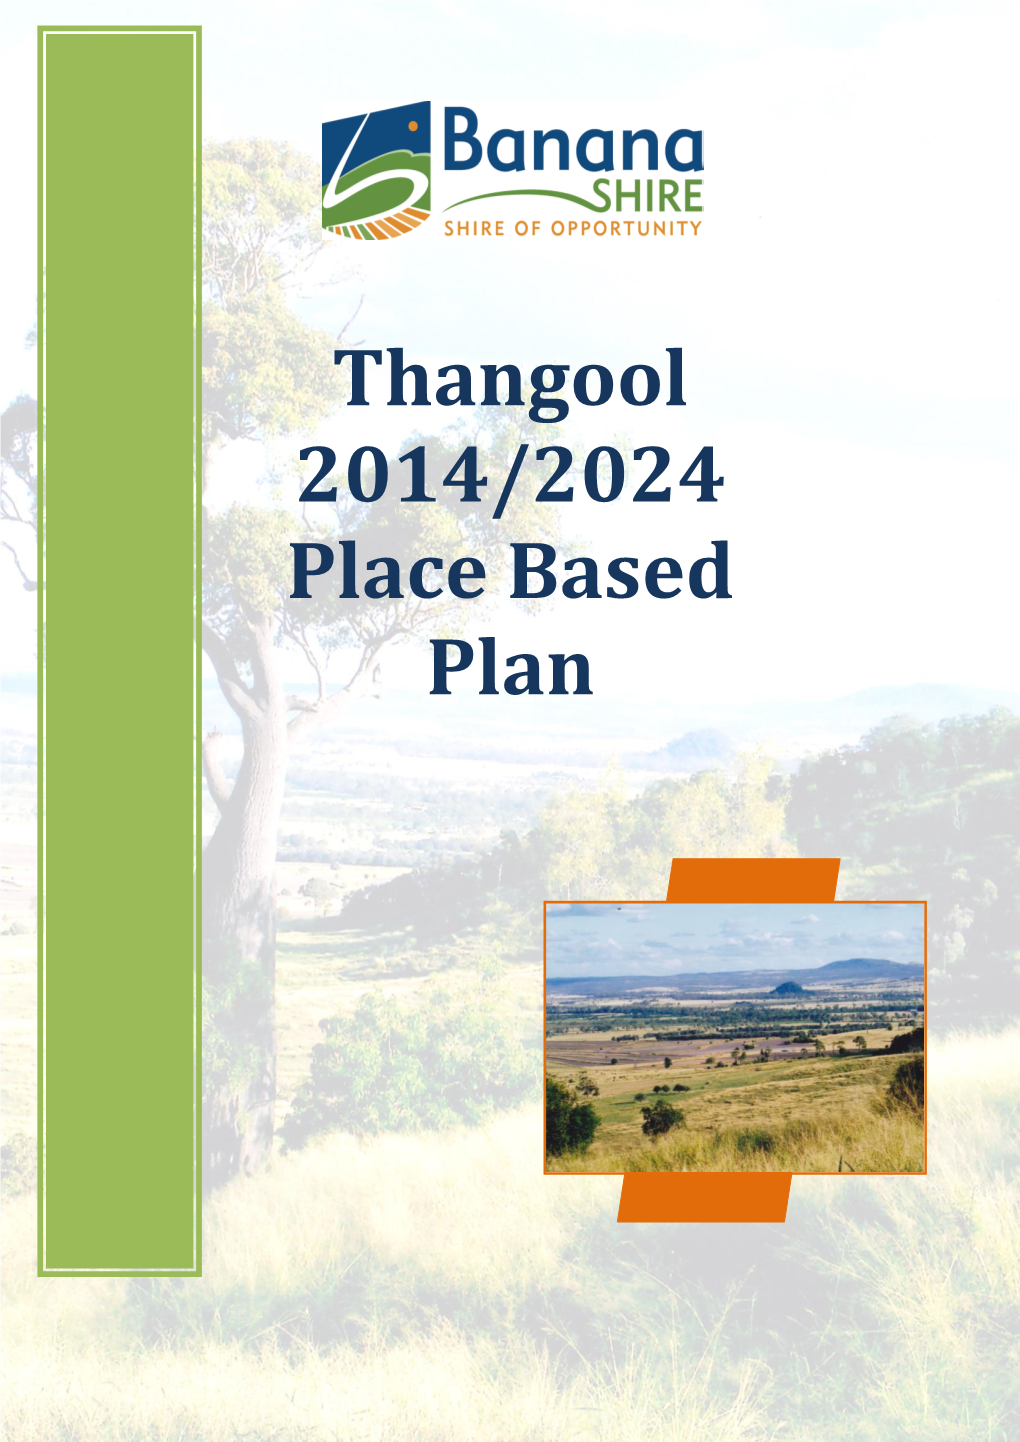 Thangool 2014/2024 Place Based Plan